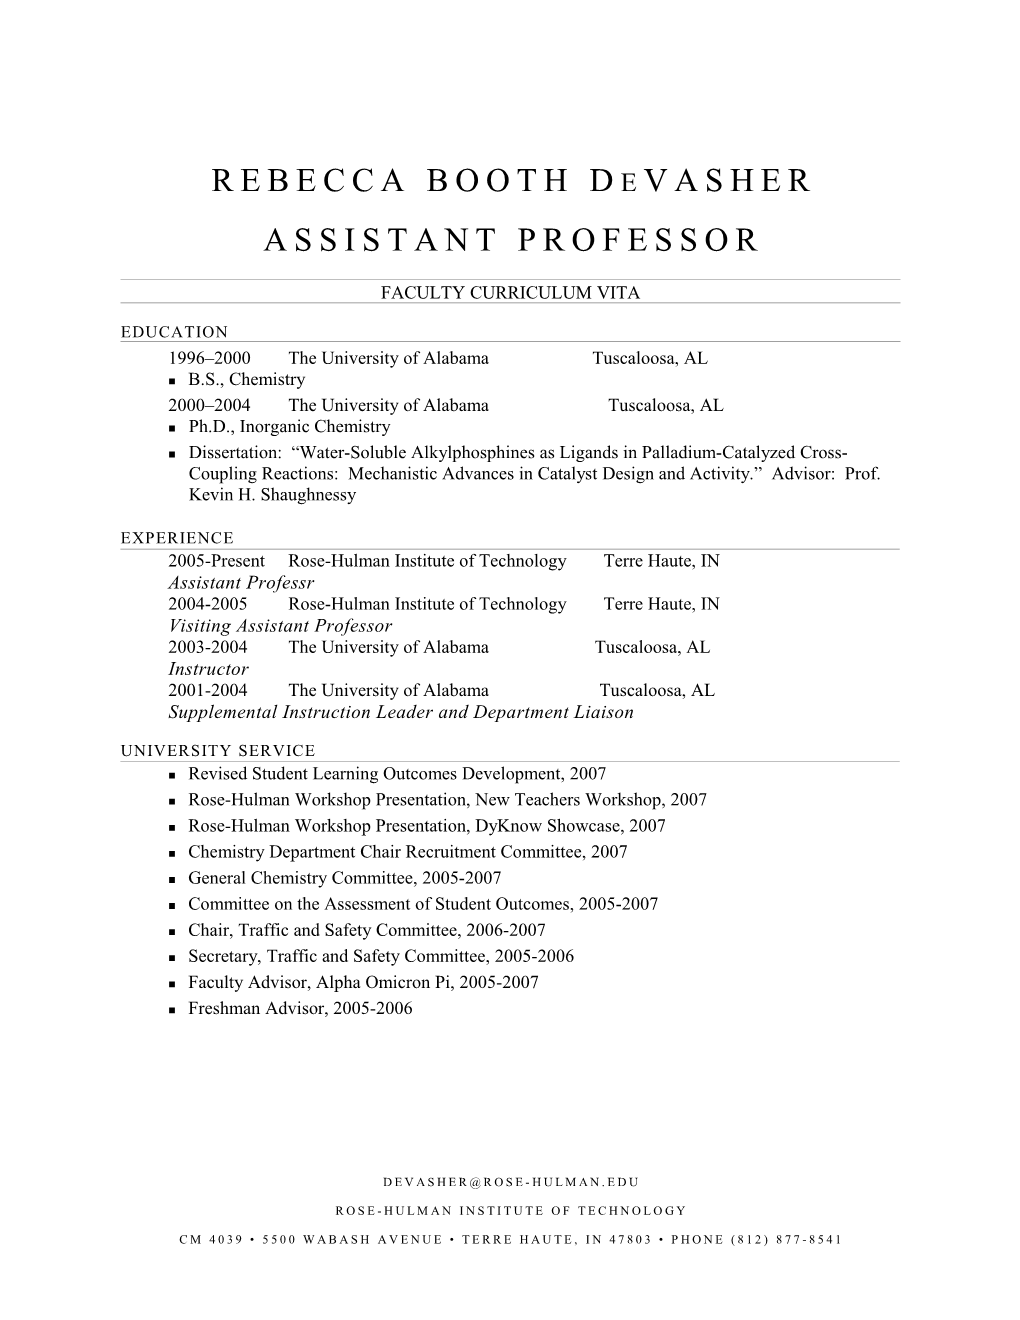 Rebecca Booth Devasher